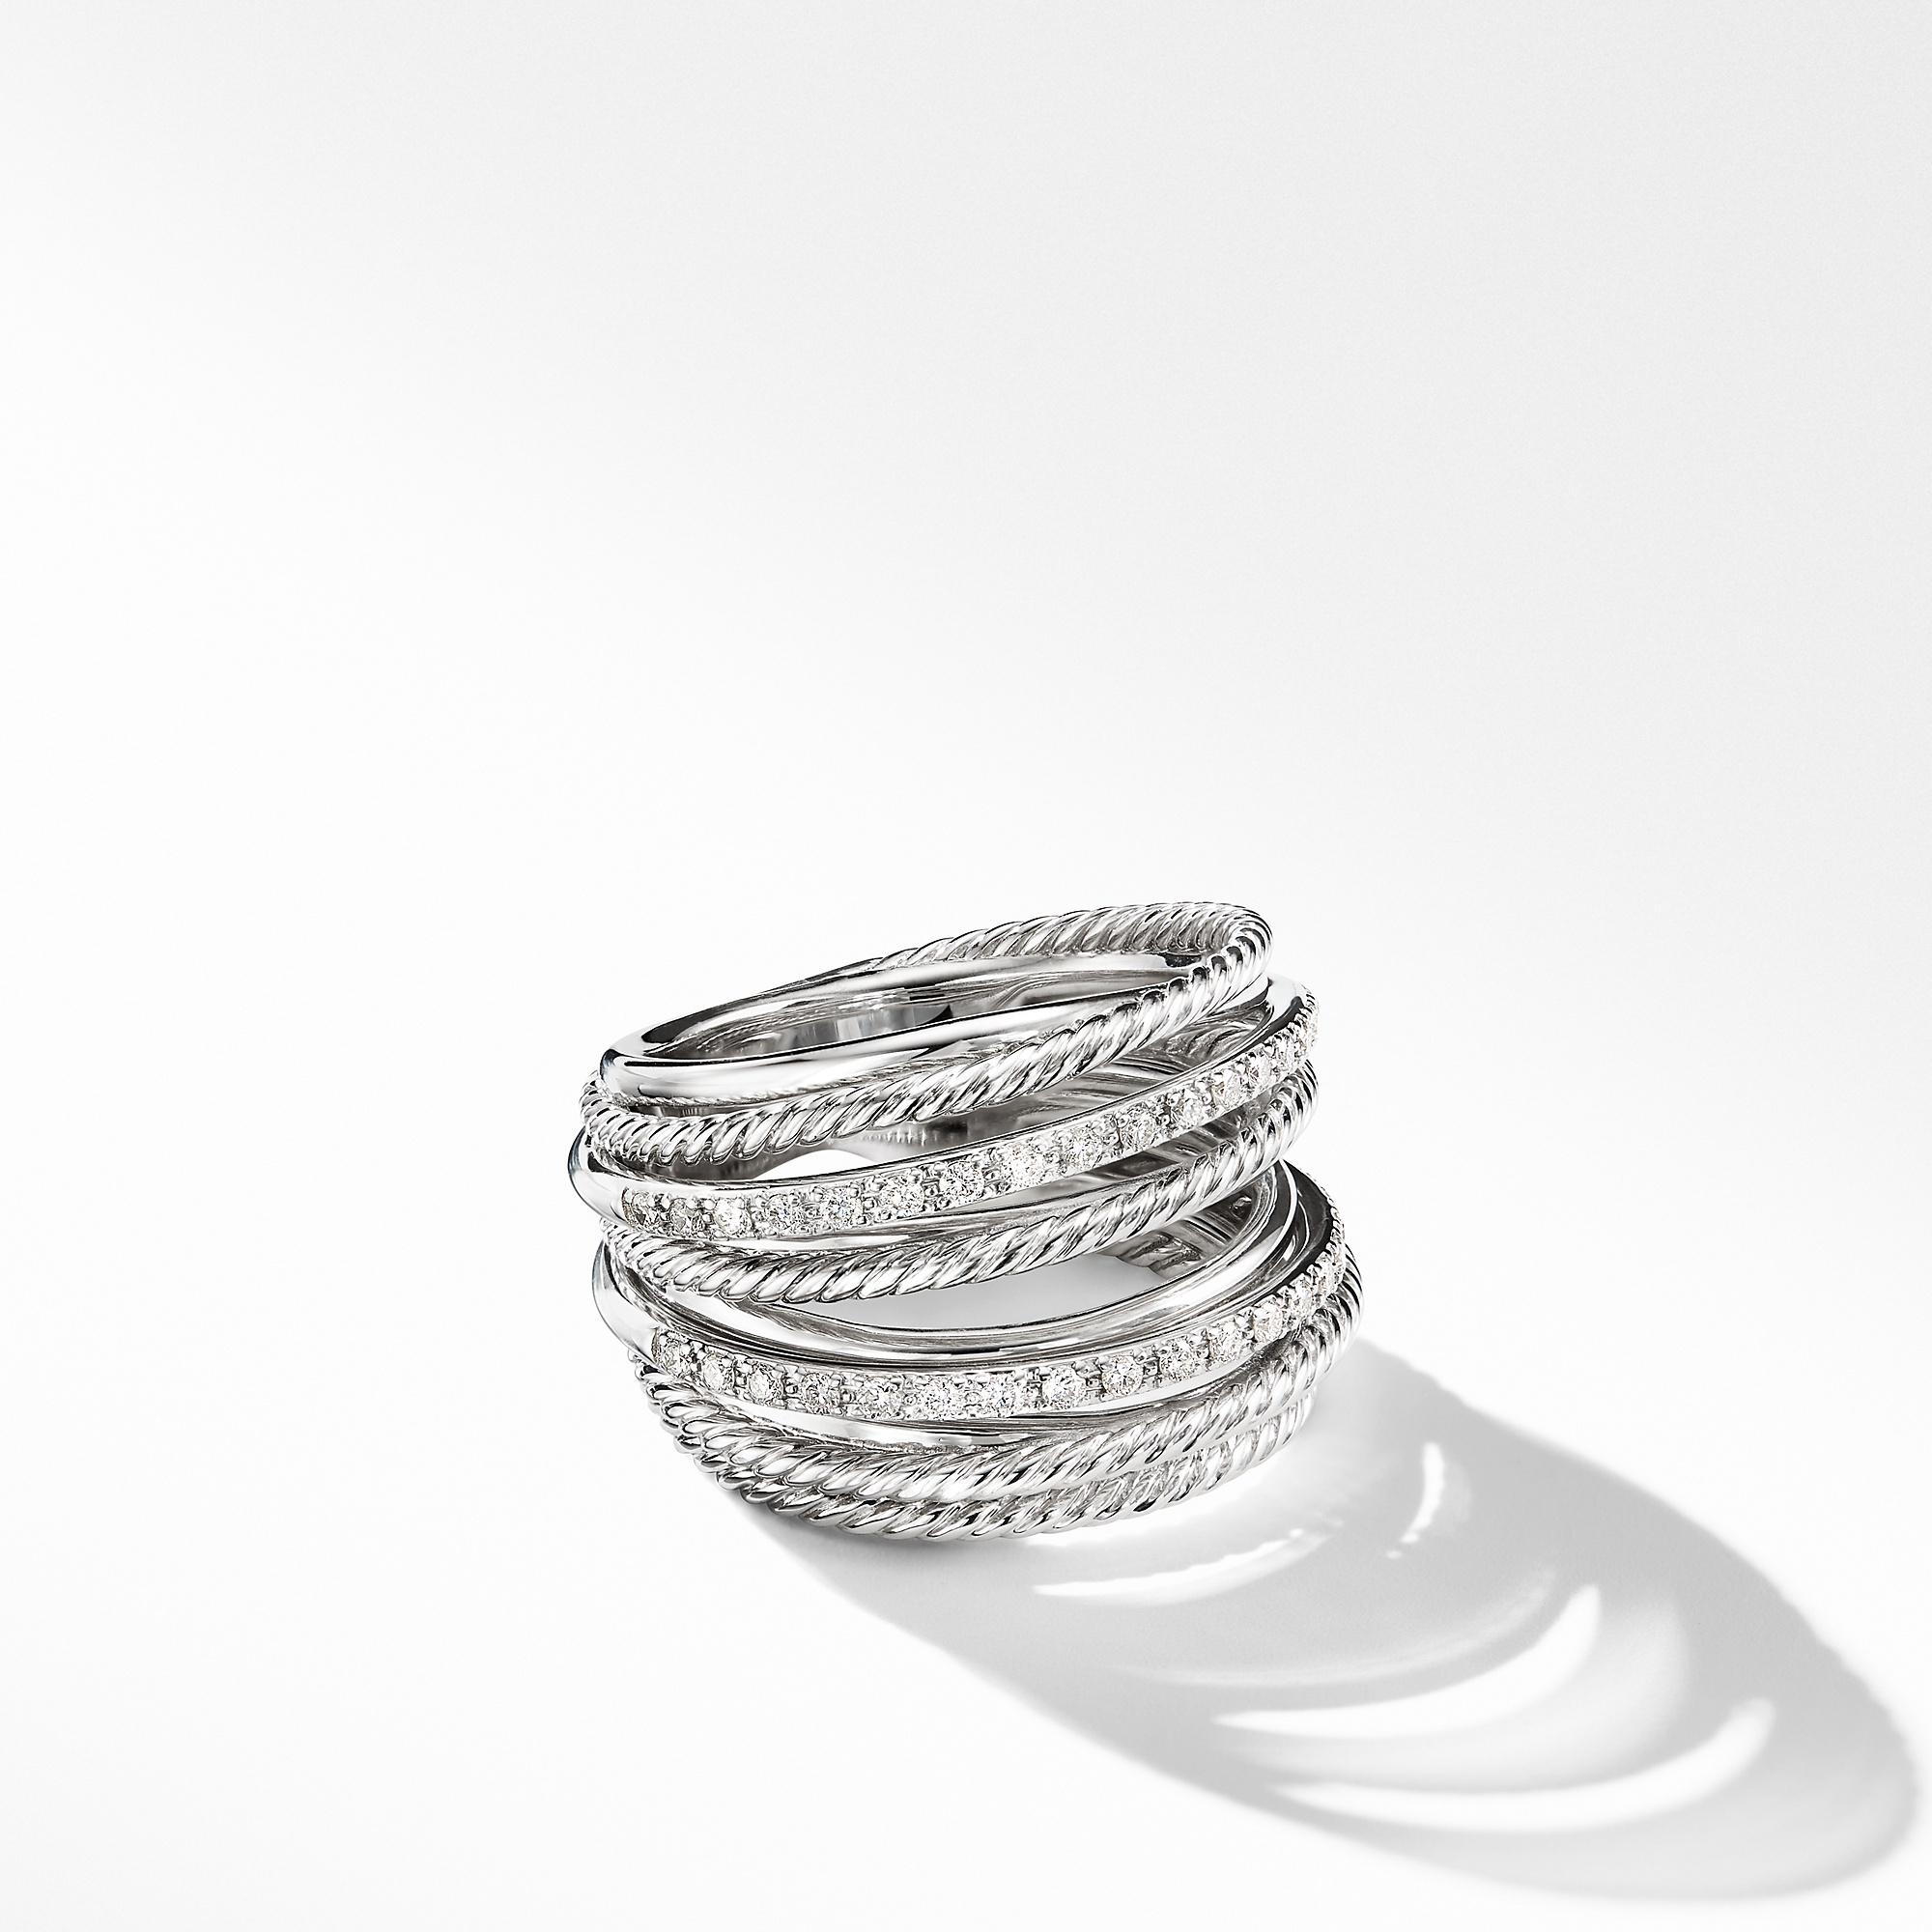 David Yurman Crossover Wide Ring with Diamonds, size 6